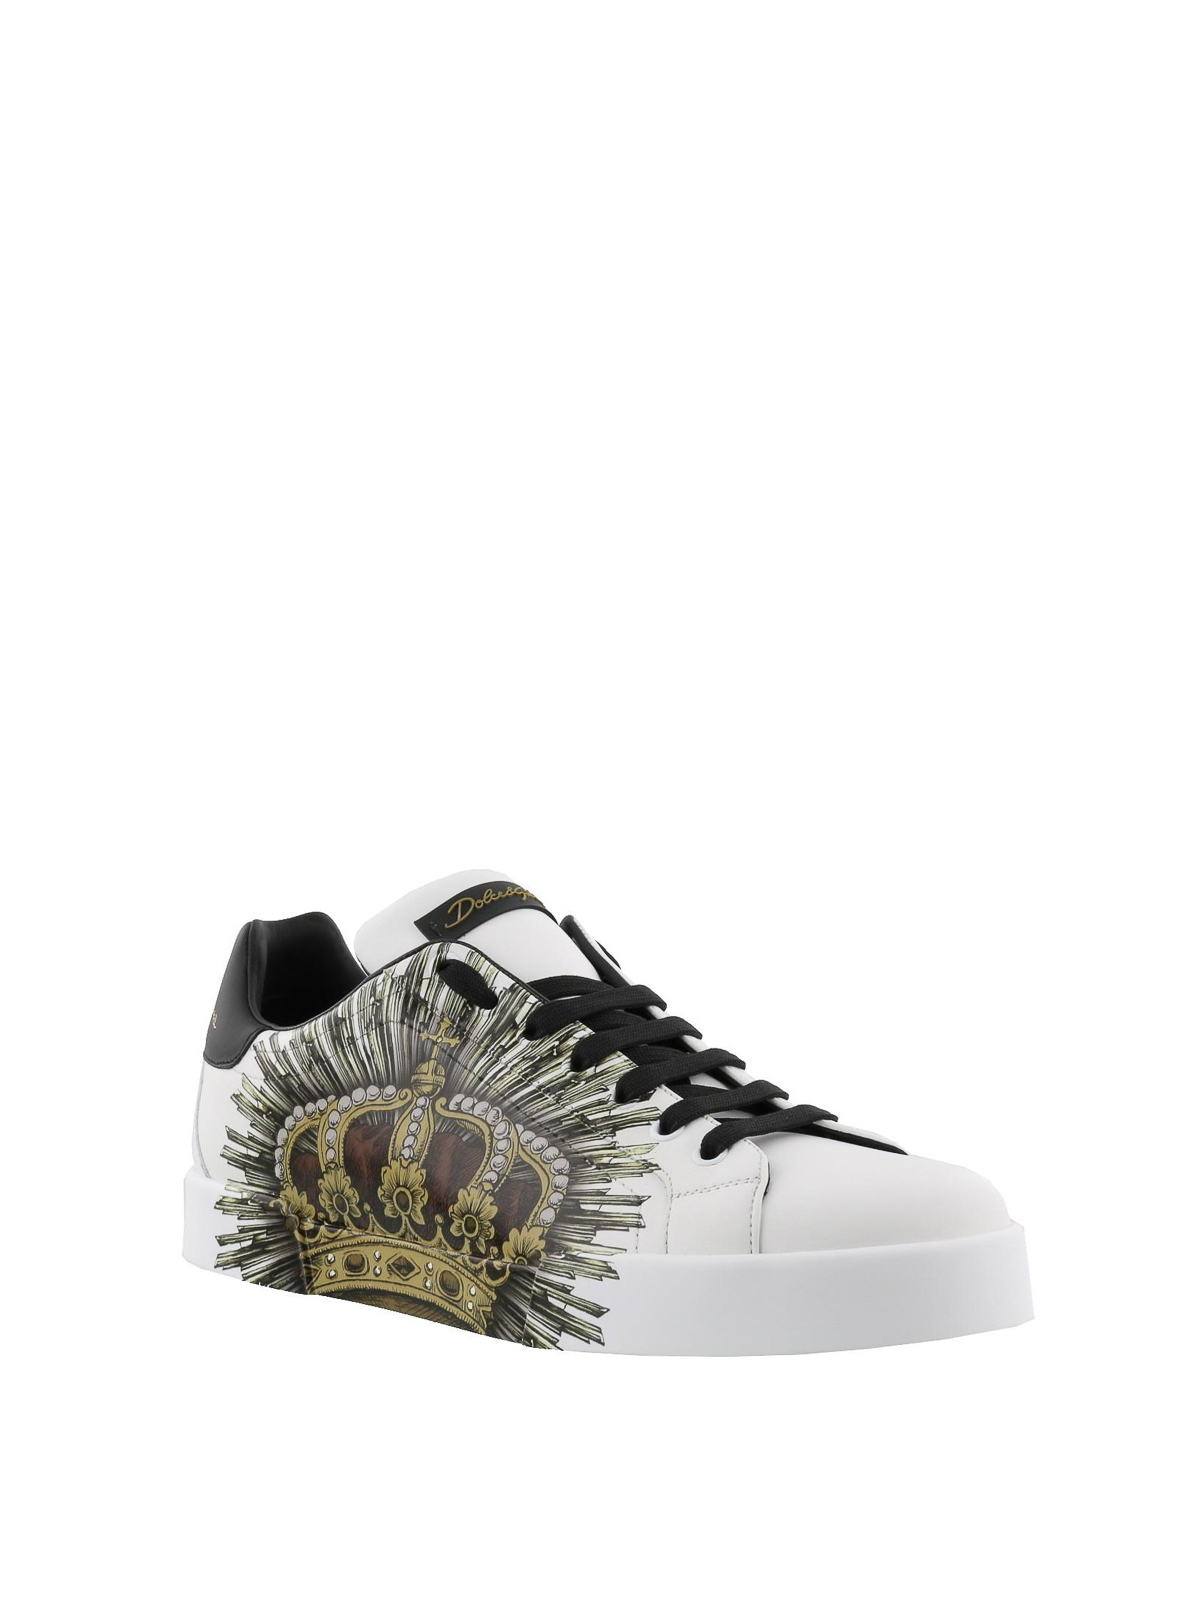 dolce gabbana crown shoes